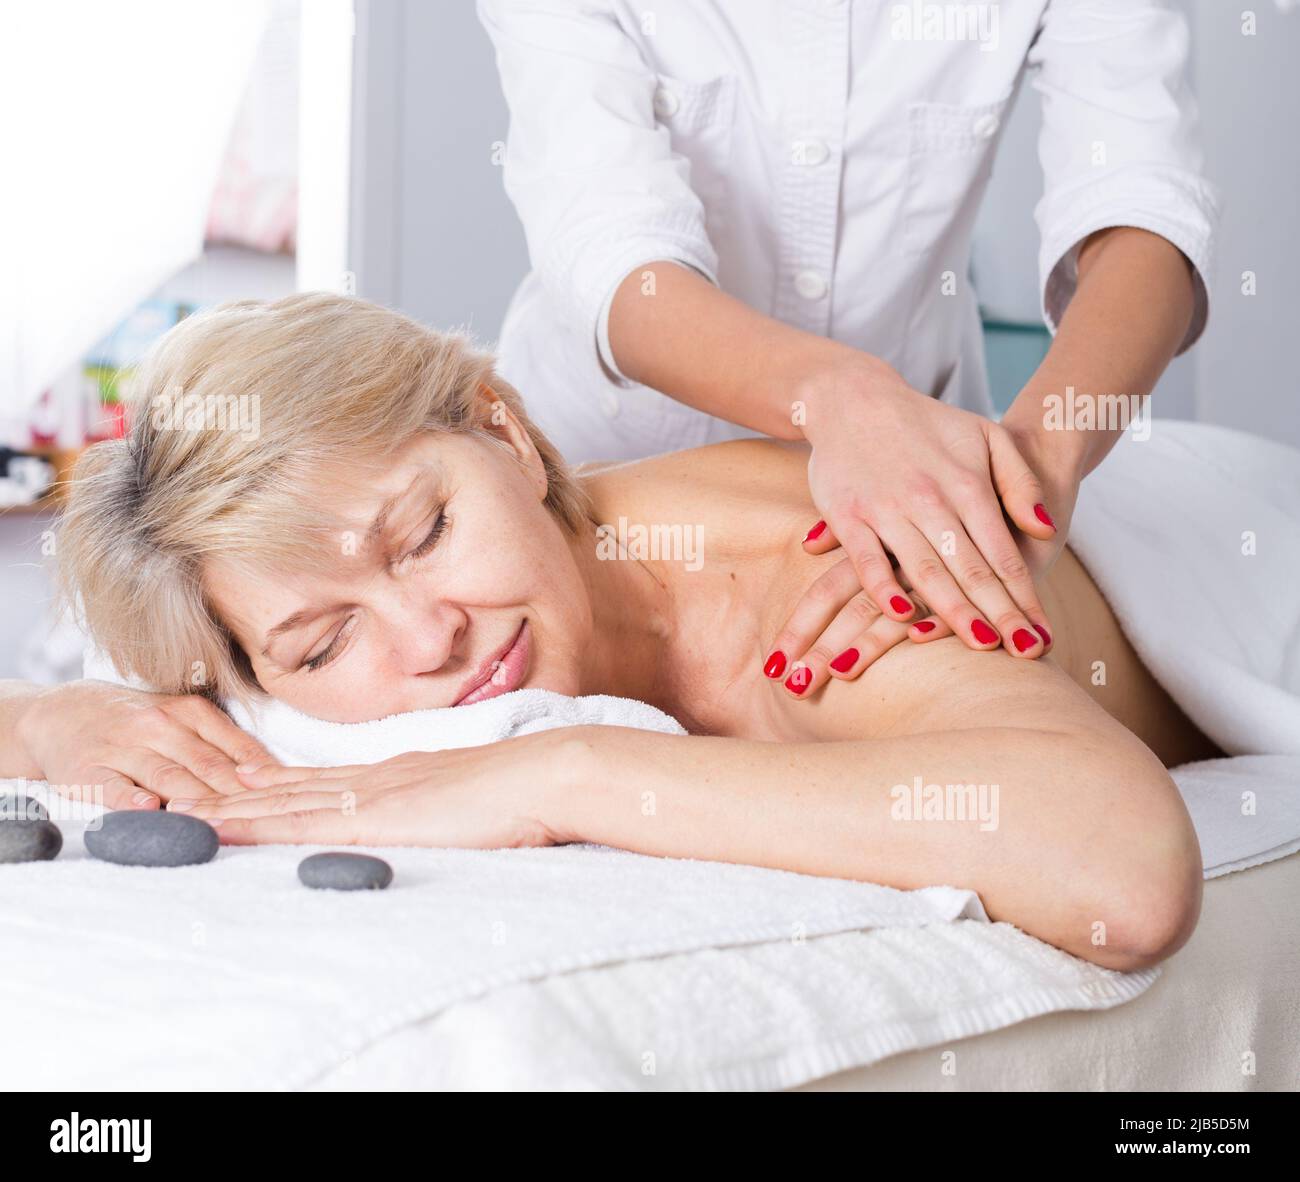 https://c8.alamy.com/comp/2JB5D5M/mature-woman-having-massage-2JB5D5M.jpg